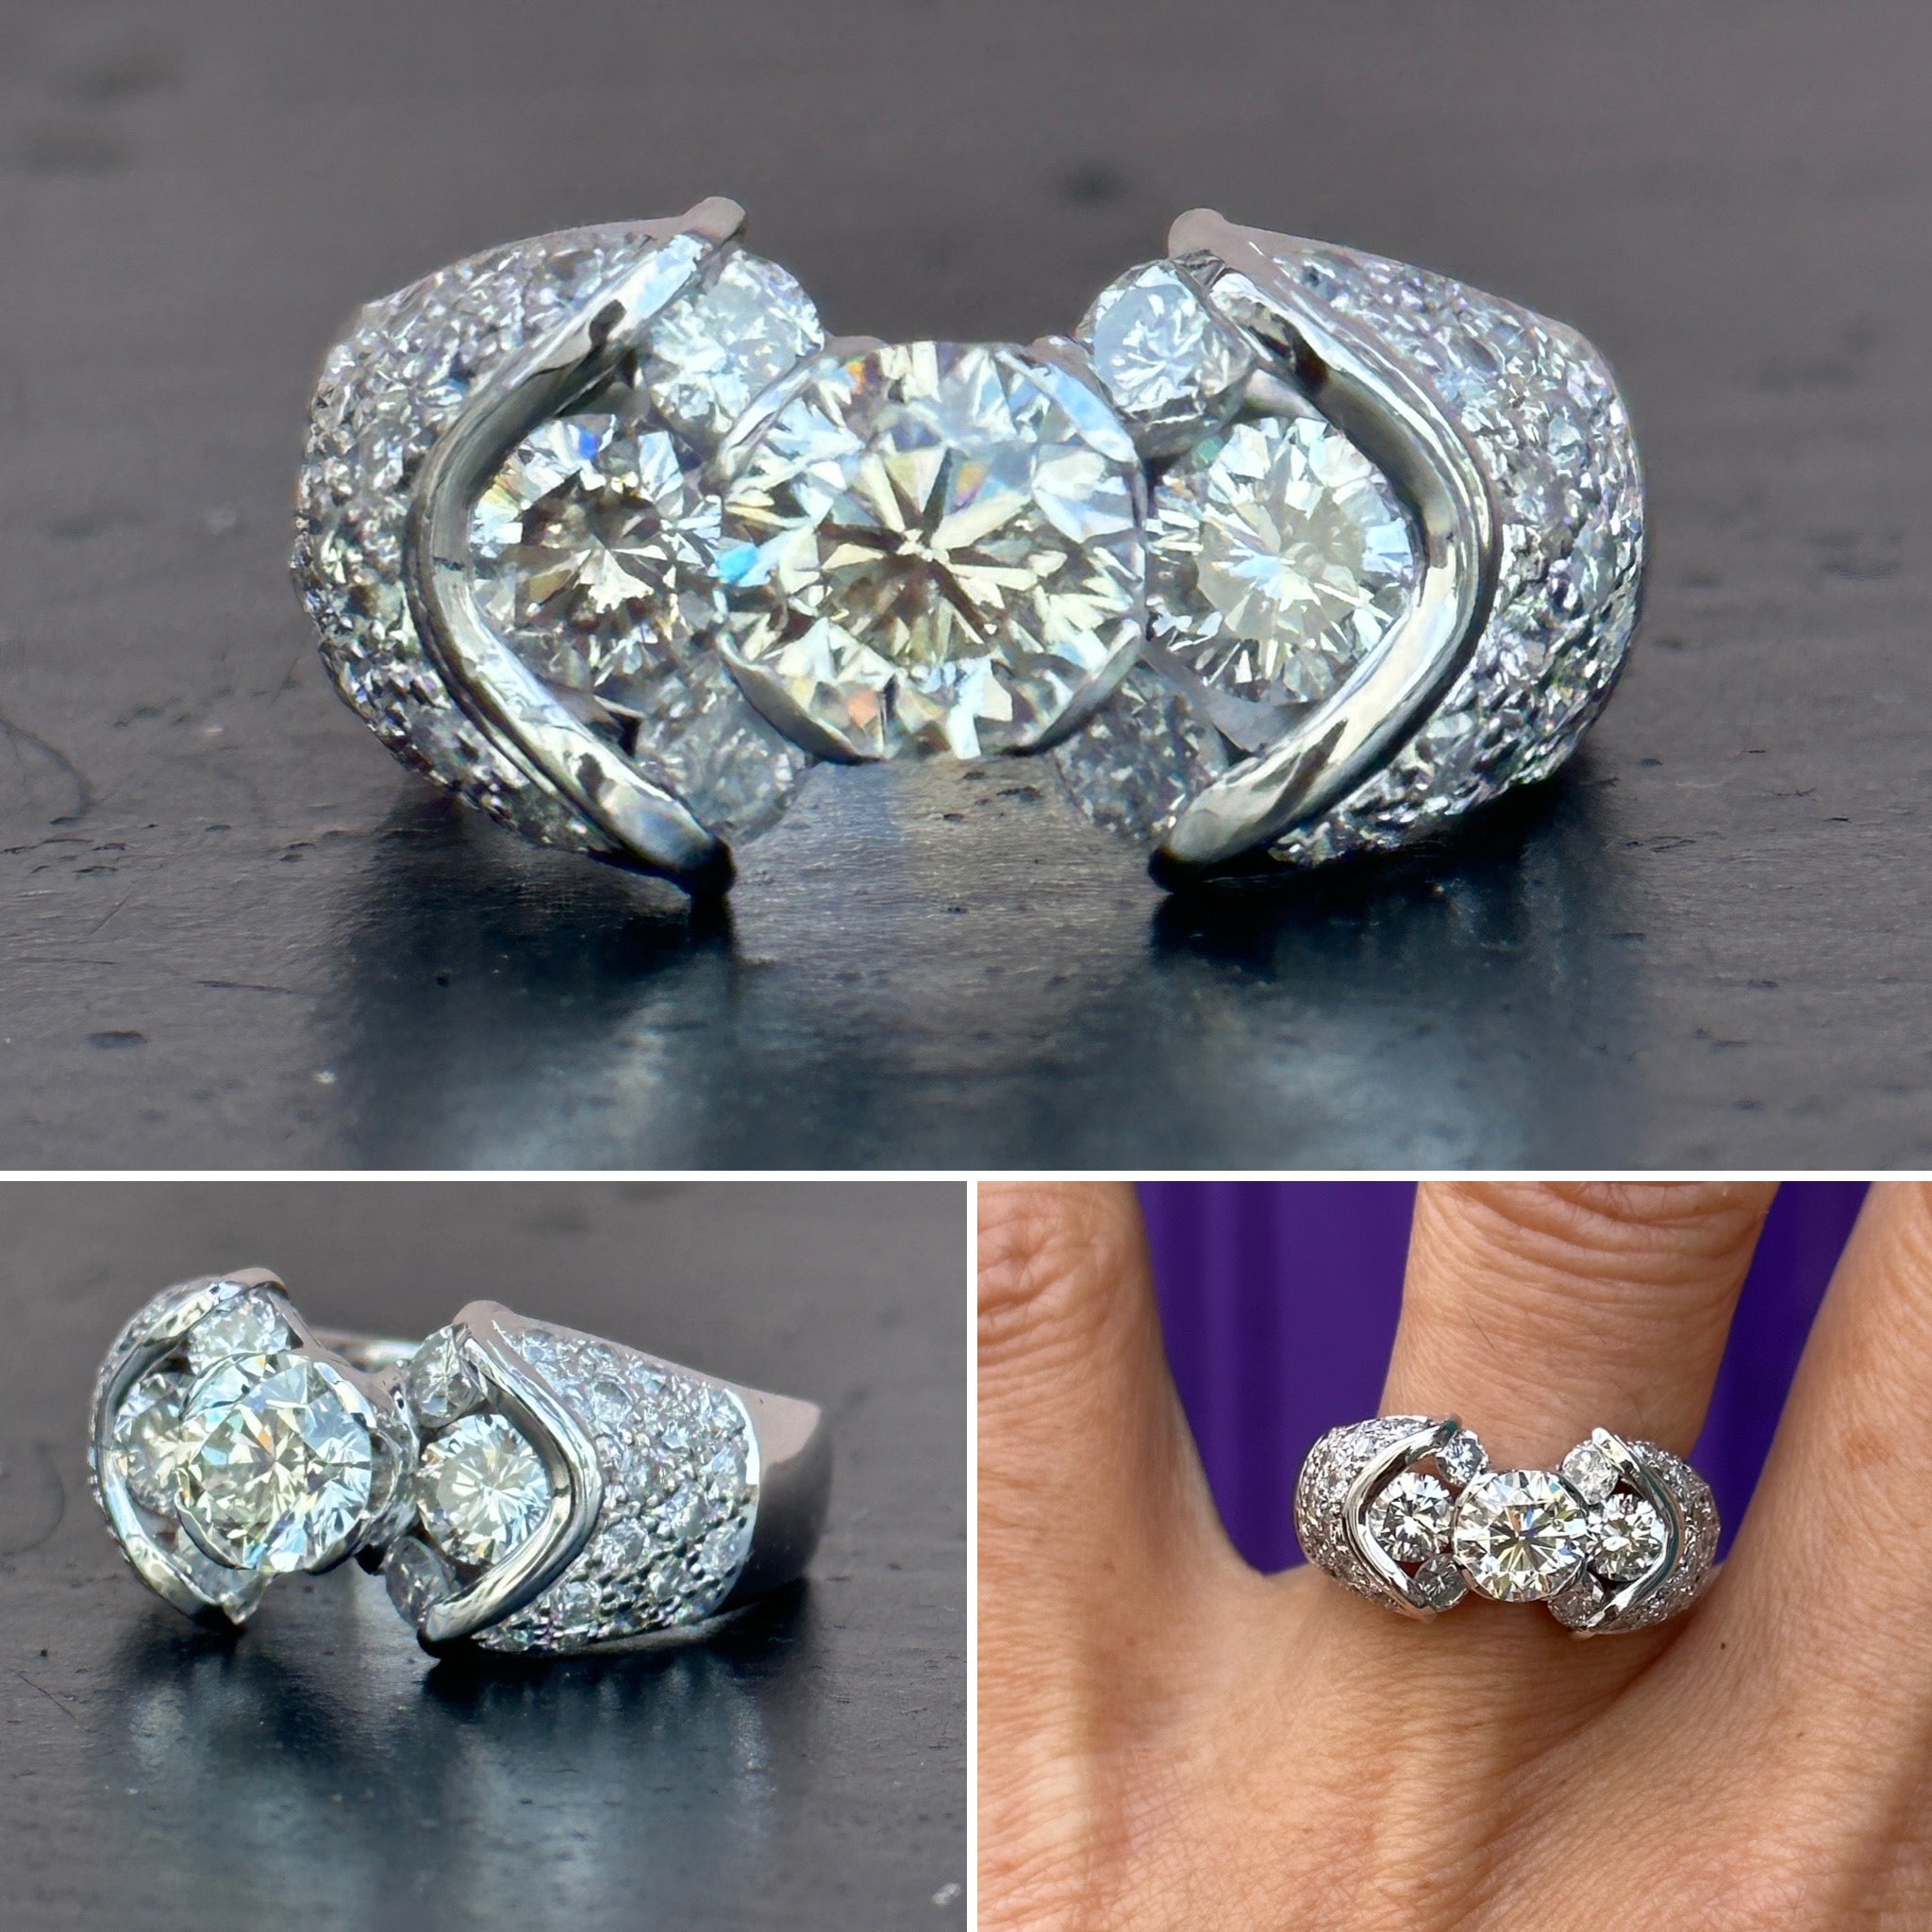 Louisa: a Vintage Diamond Ring